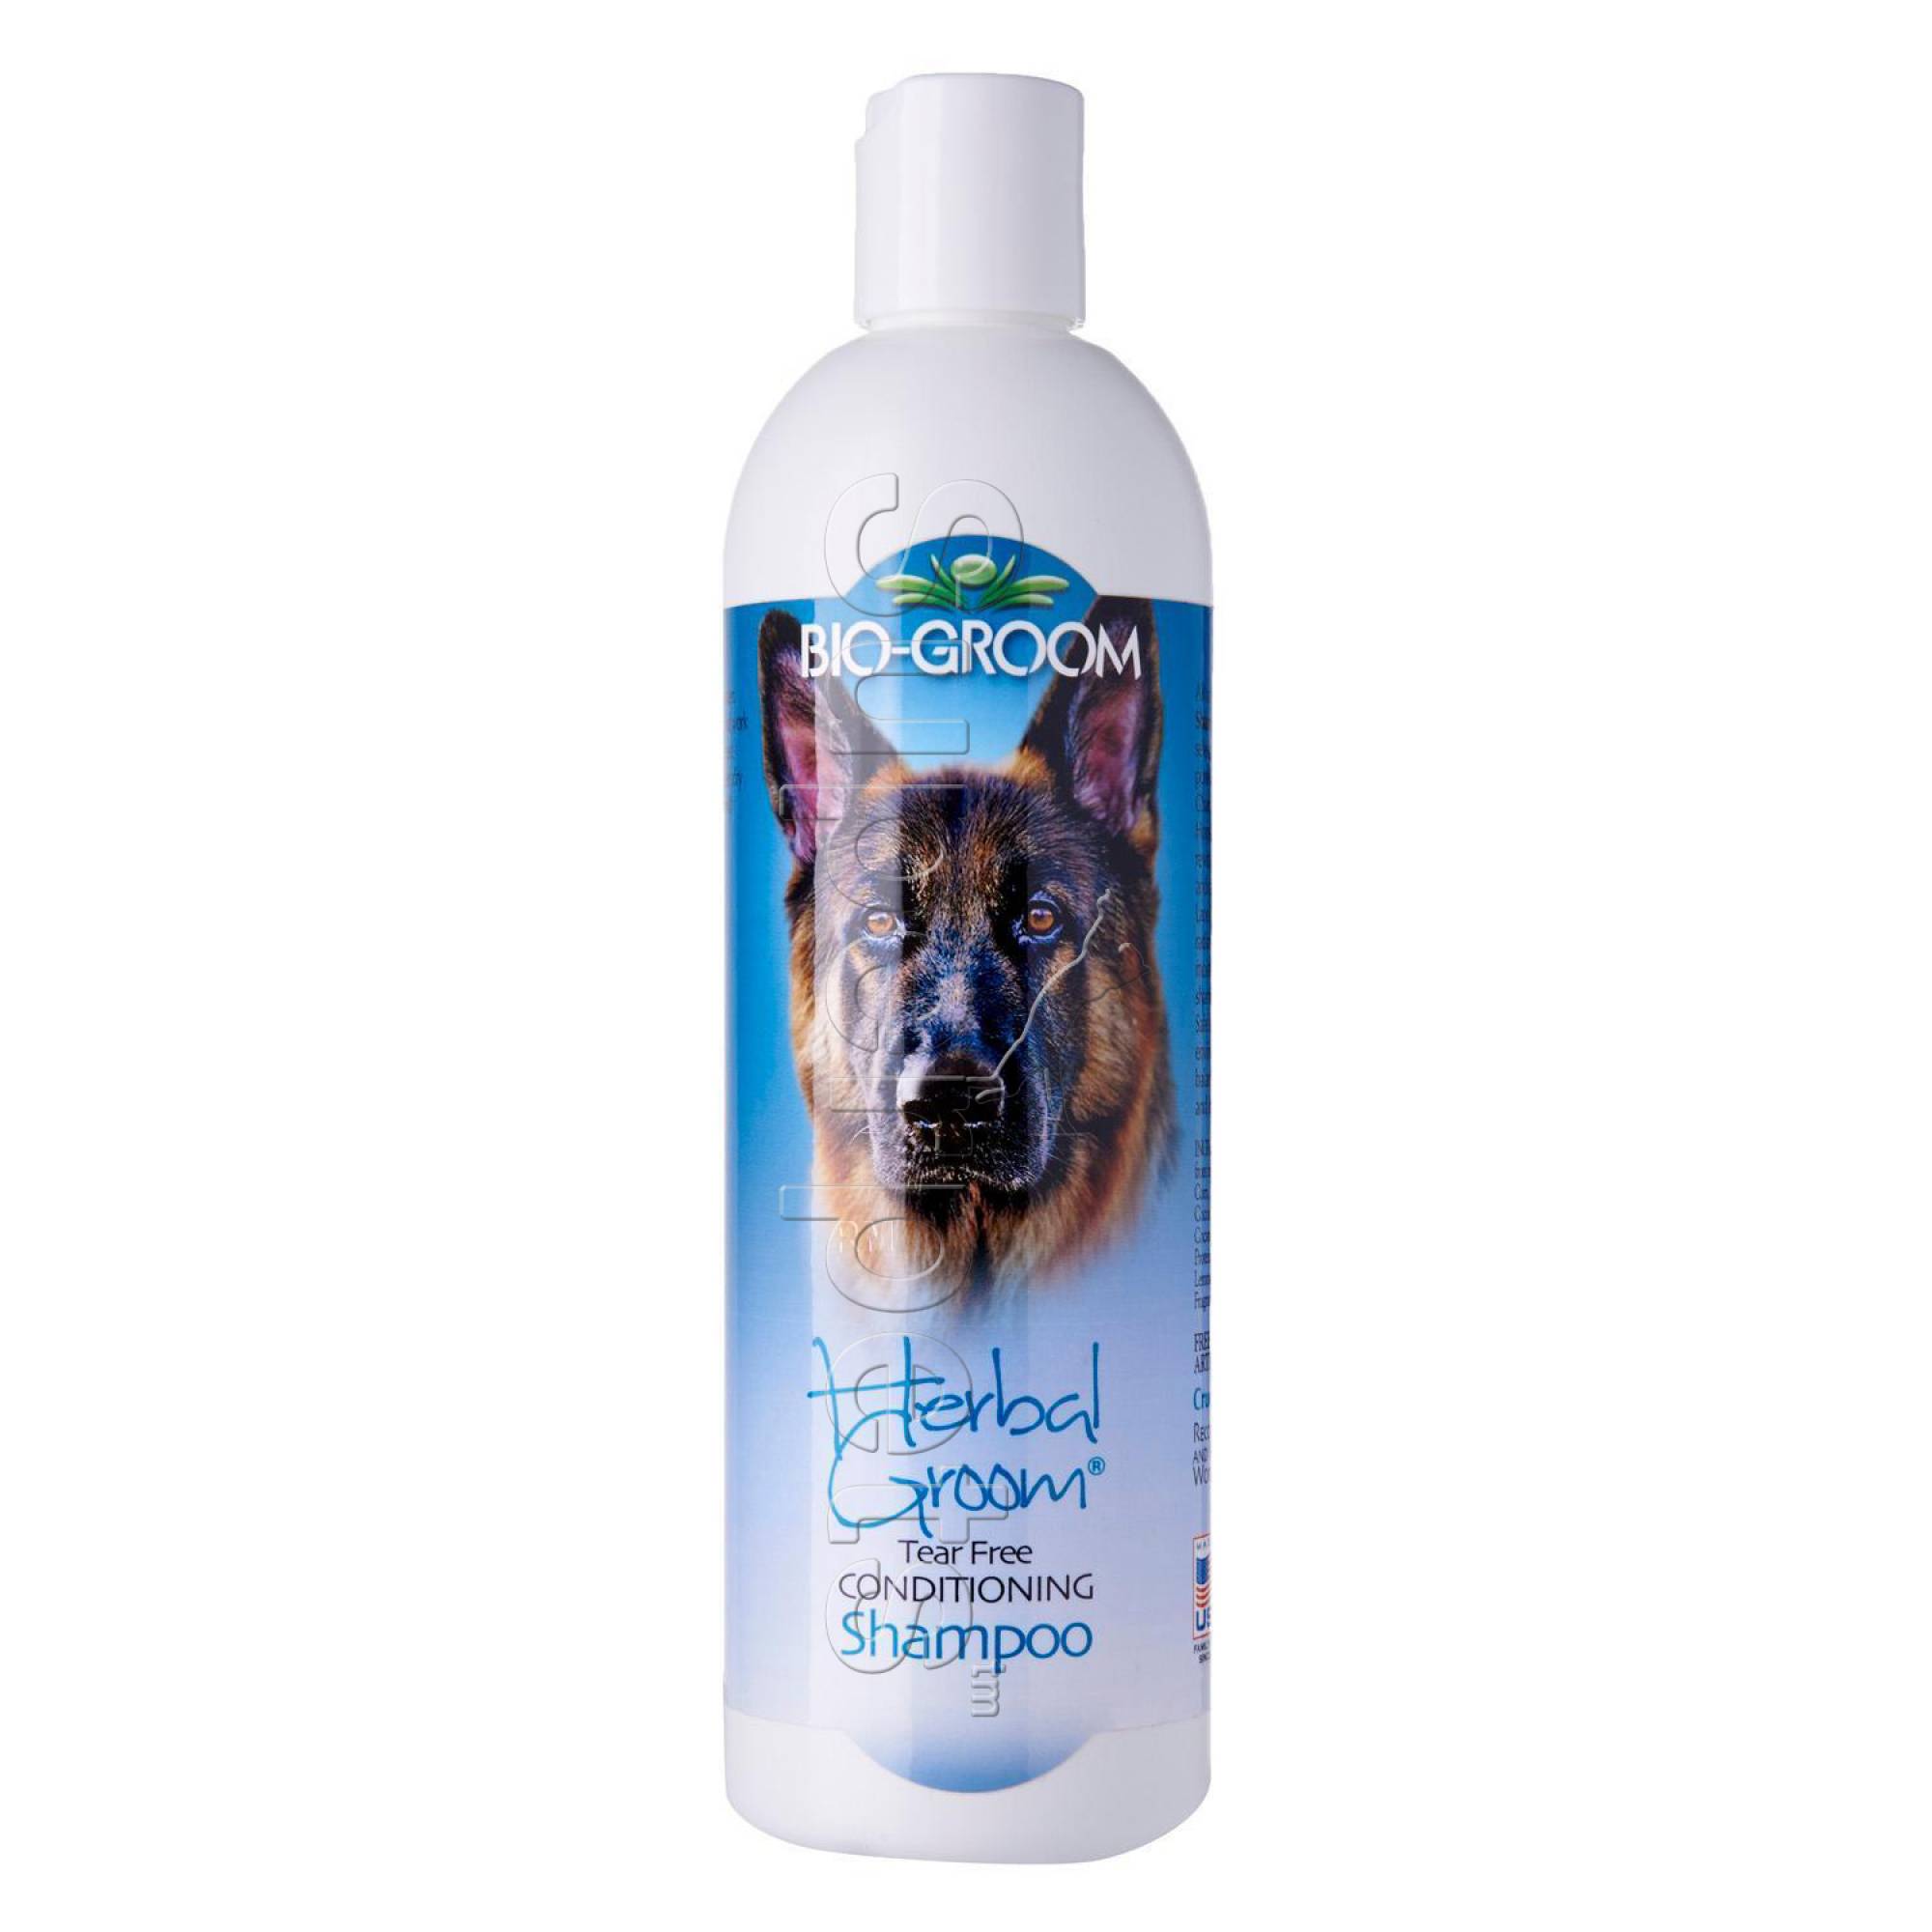 Bio-Groom Herbal Groom Tear Free Conditioning Shampoo 12oz (355ml)